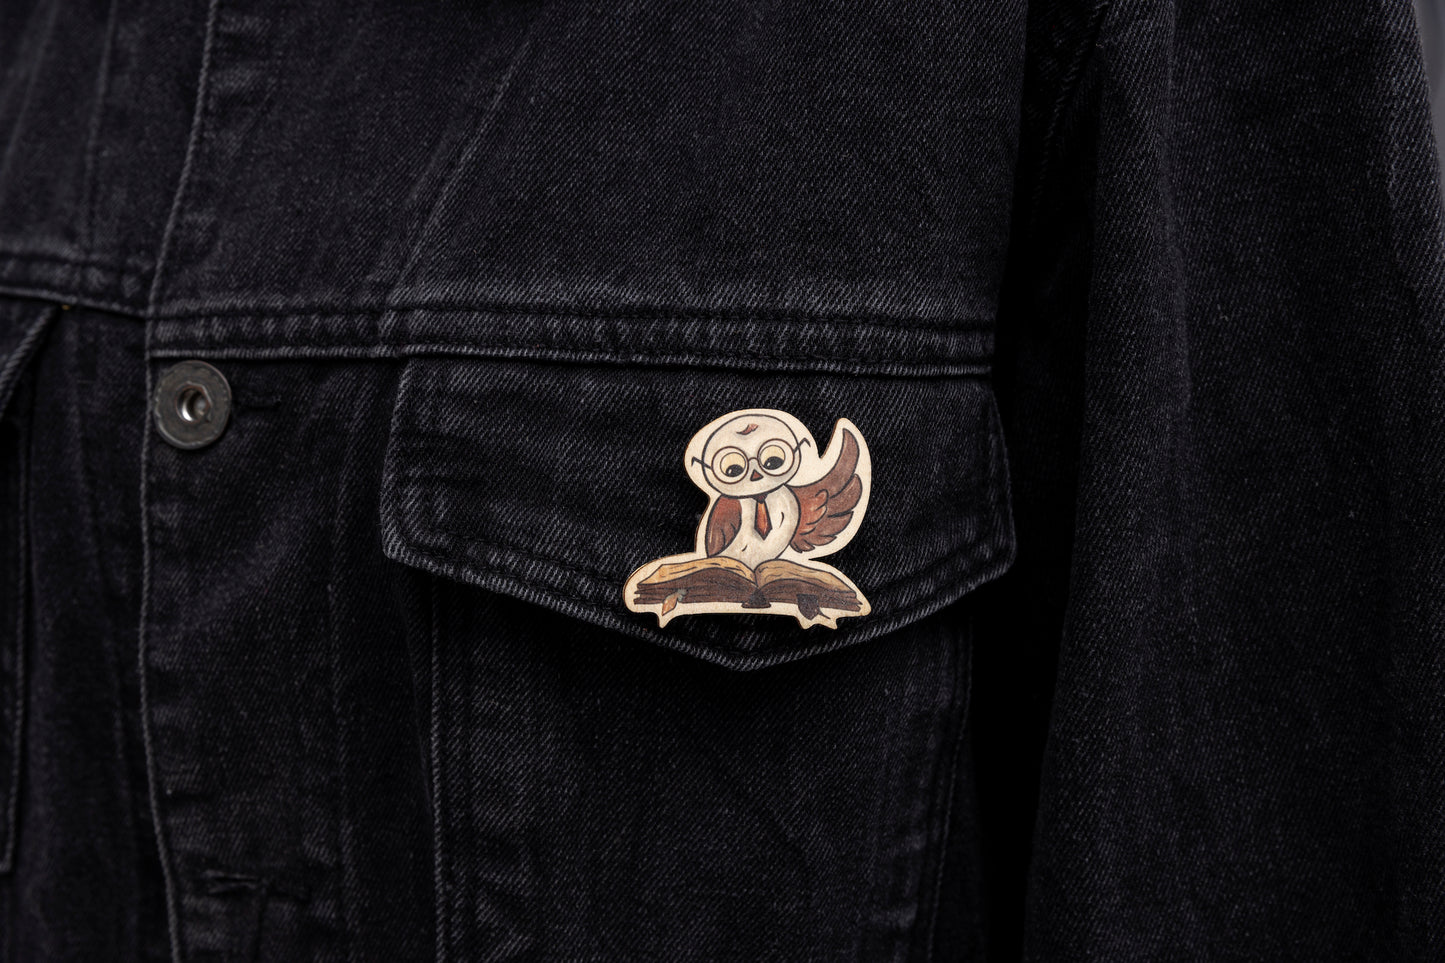 Owl Fashion Pin